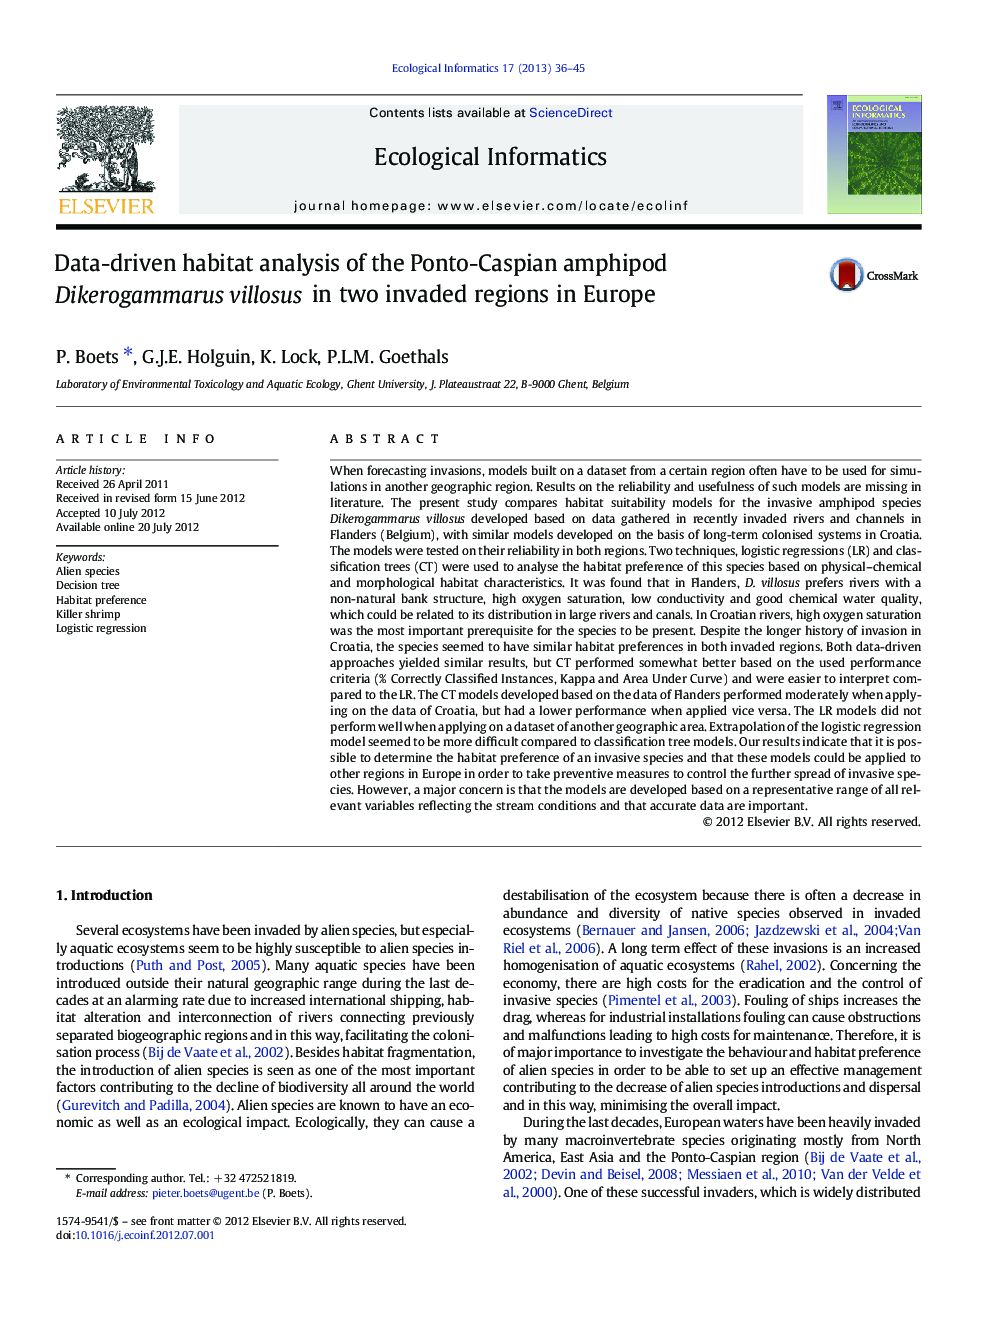 Data-driven habitat analysis of the Ponto-Caspian amphipod Dikerogammarus villosus in two invaded regions in Europe